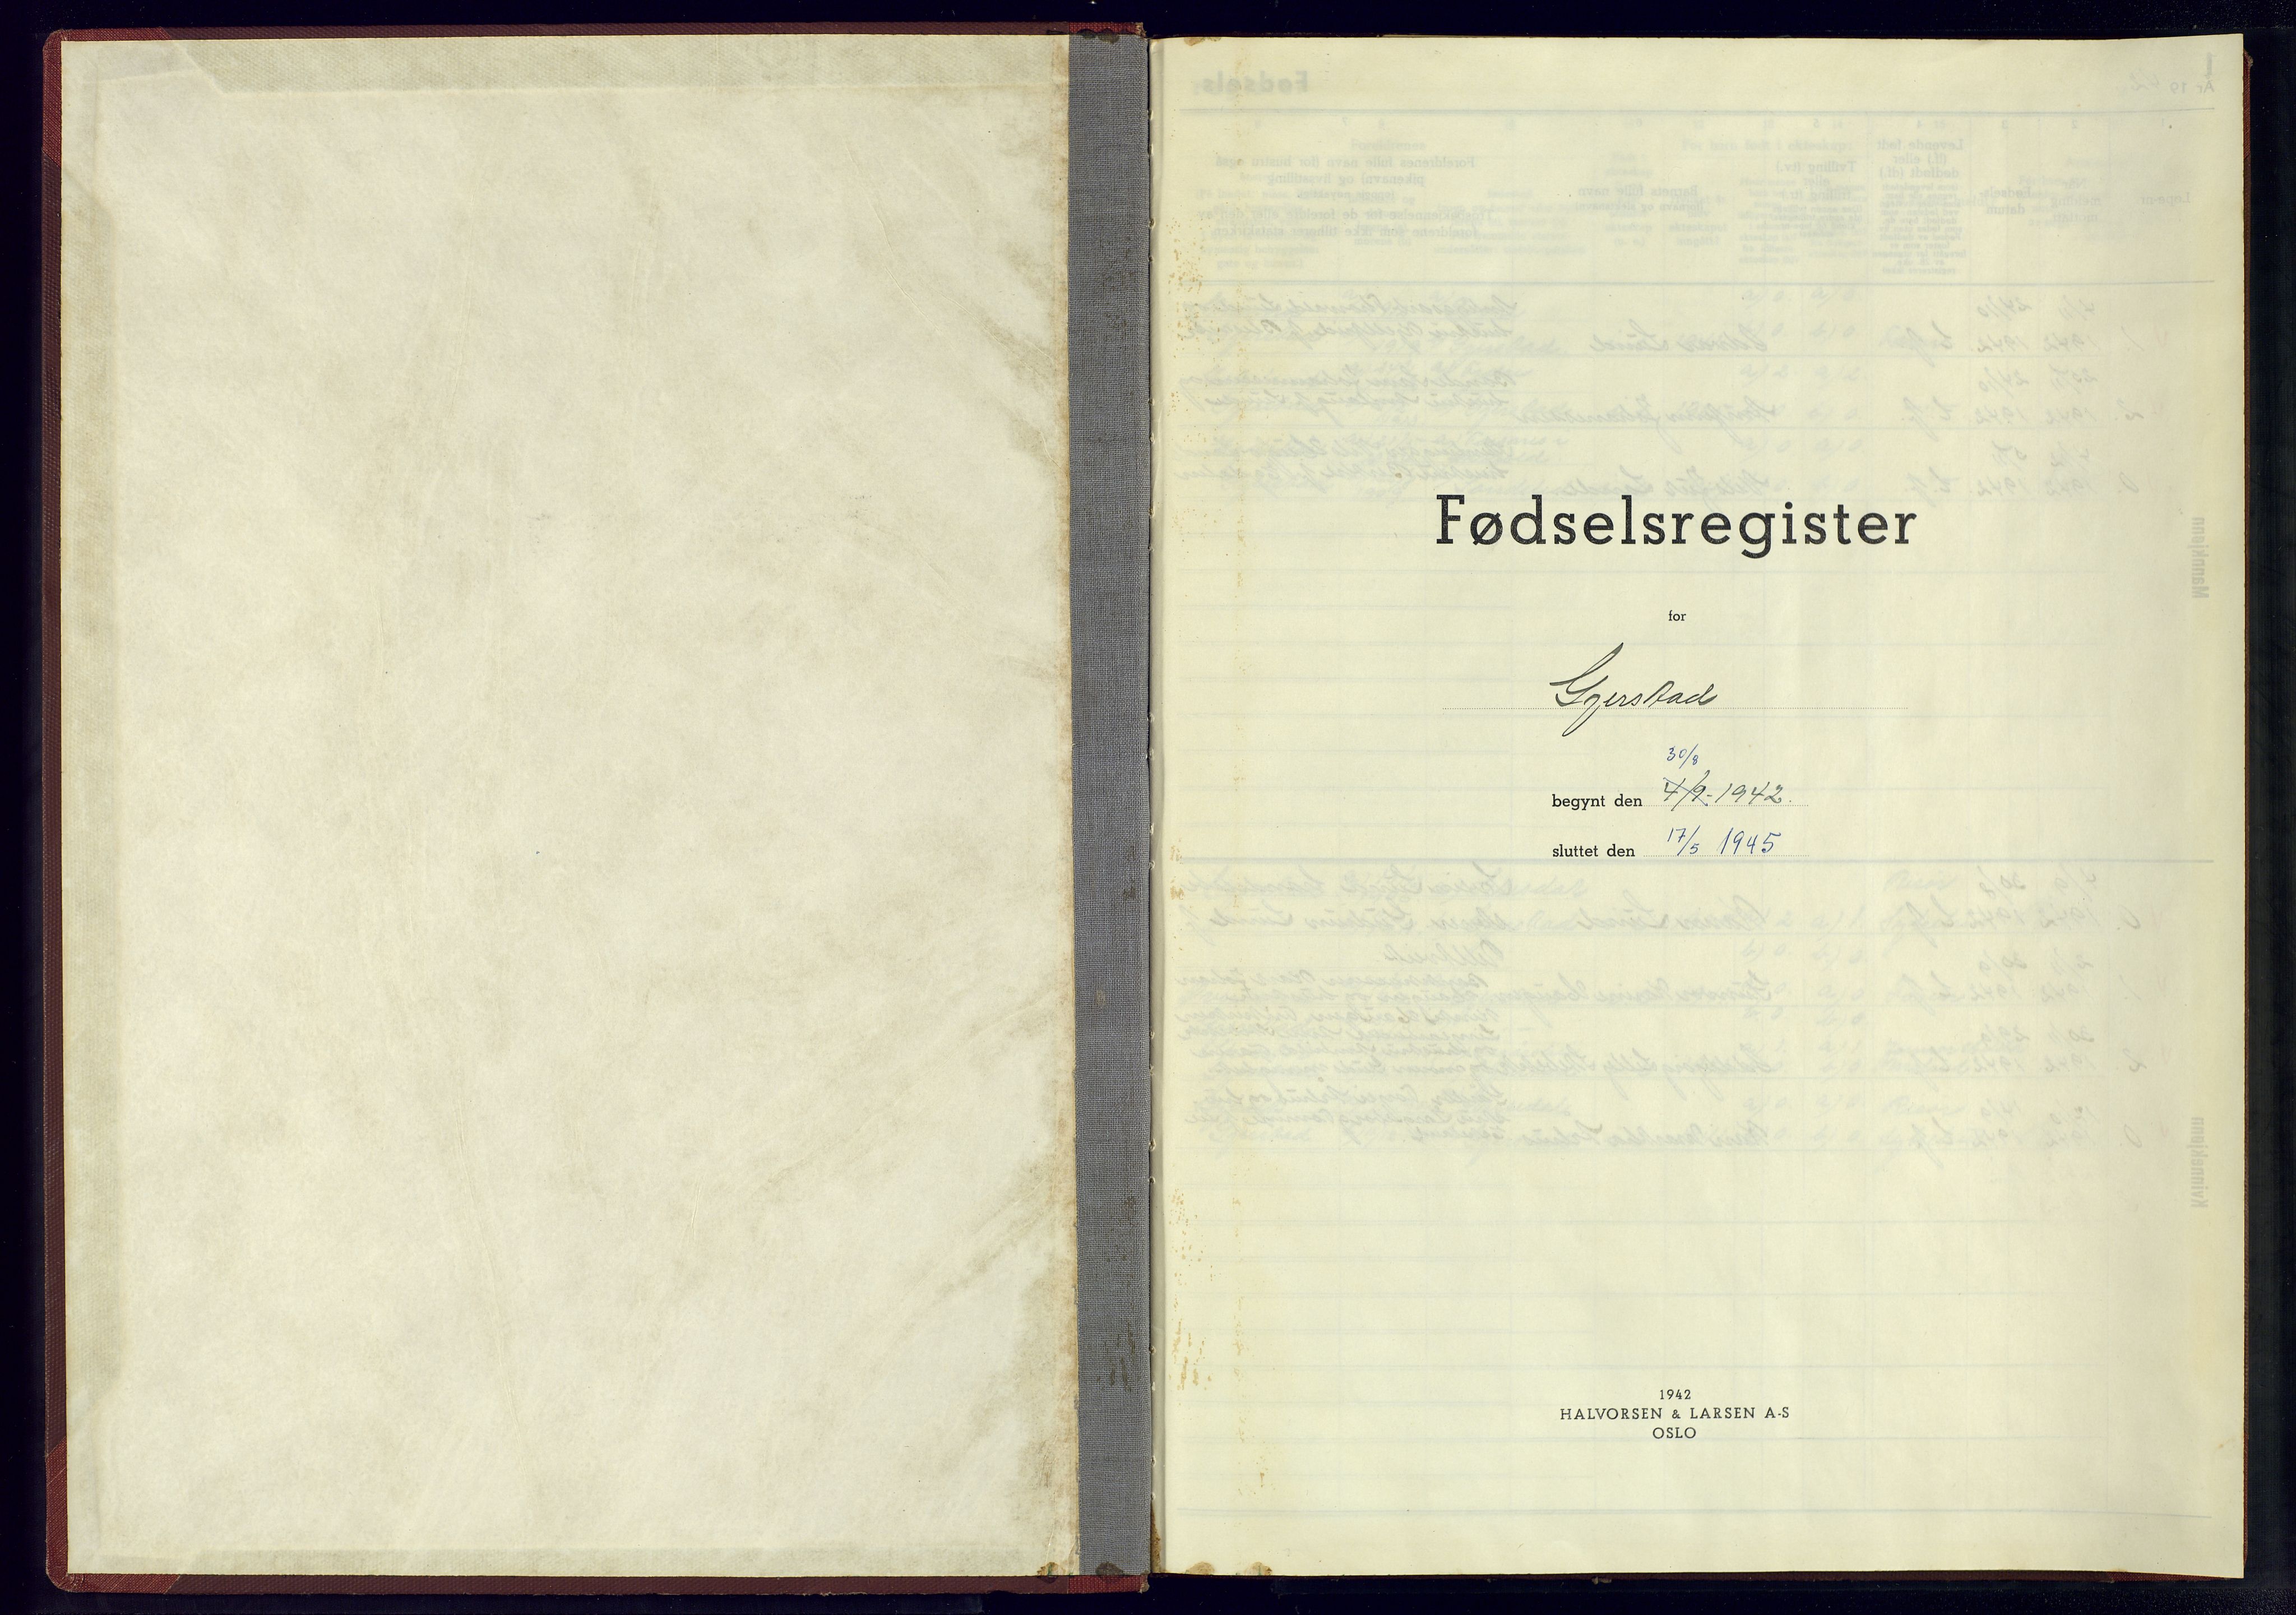 Gjerstad sokneprestkontor, SAK/1111-0014/J/Je/L0001: Fødselsregister nr. A-VI-3, 1942-1945